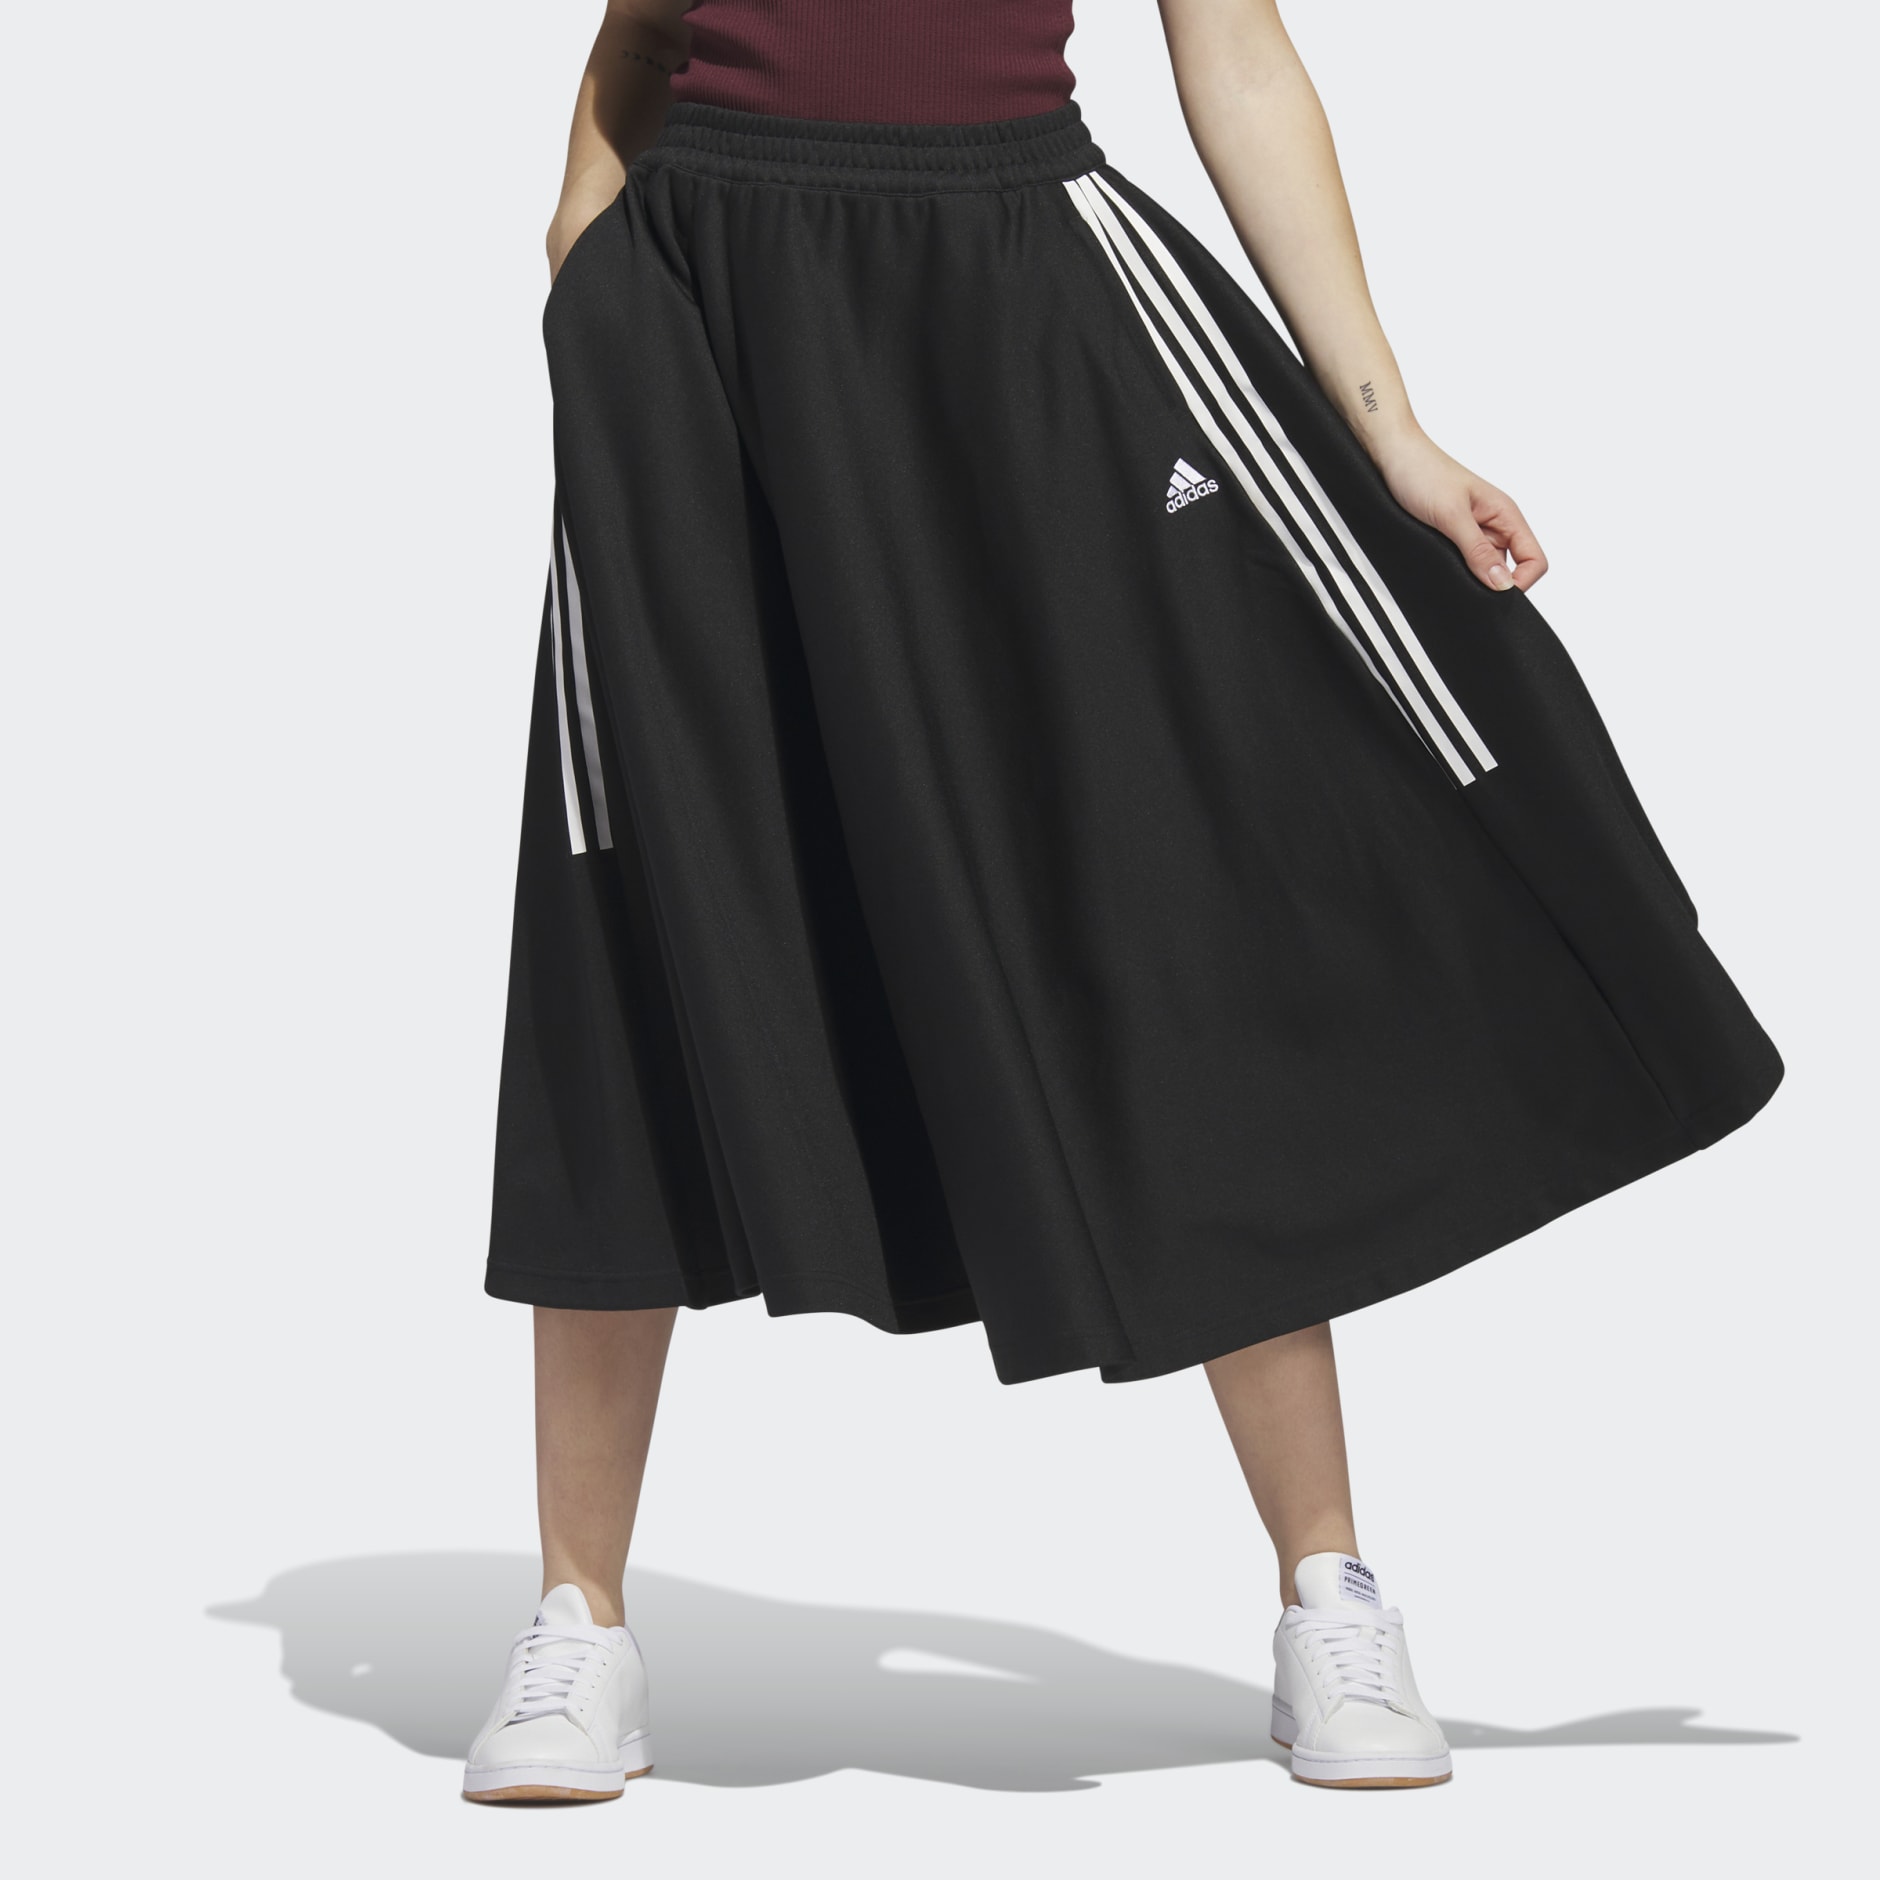 Ingenieros ayer Documento adidas Track Skirt - Black | adidas OM